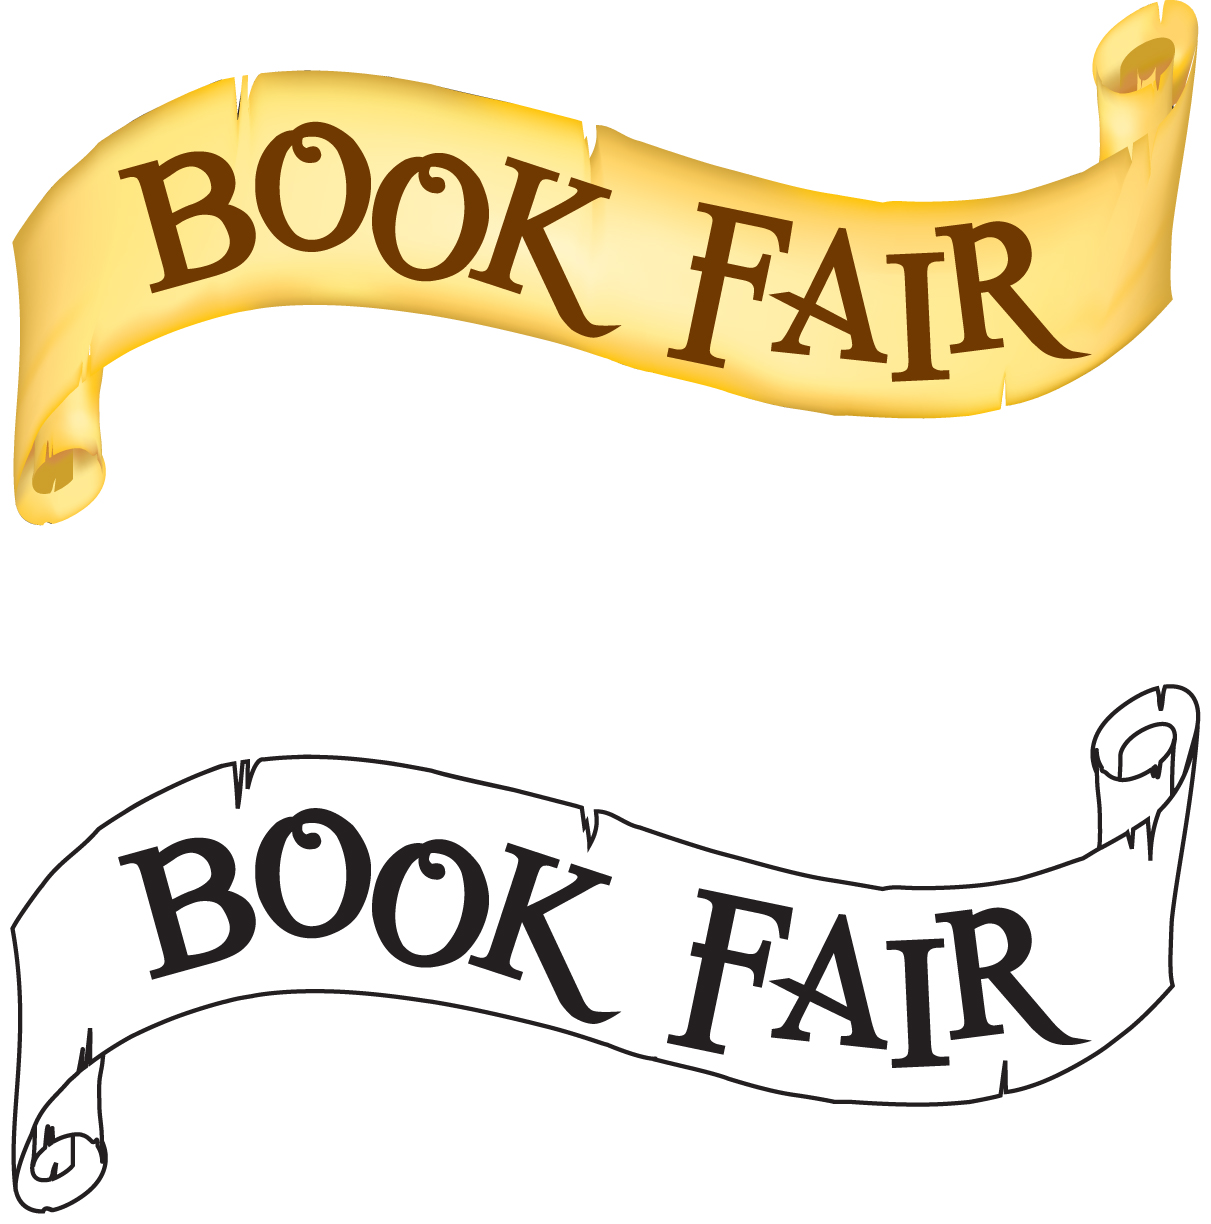 Scholastic Canada | Book Fairs: WebArt